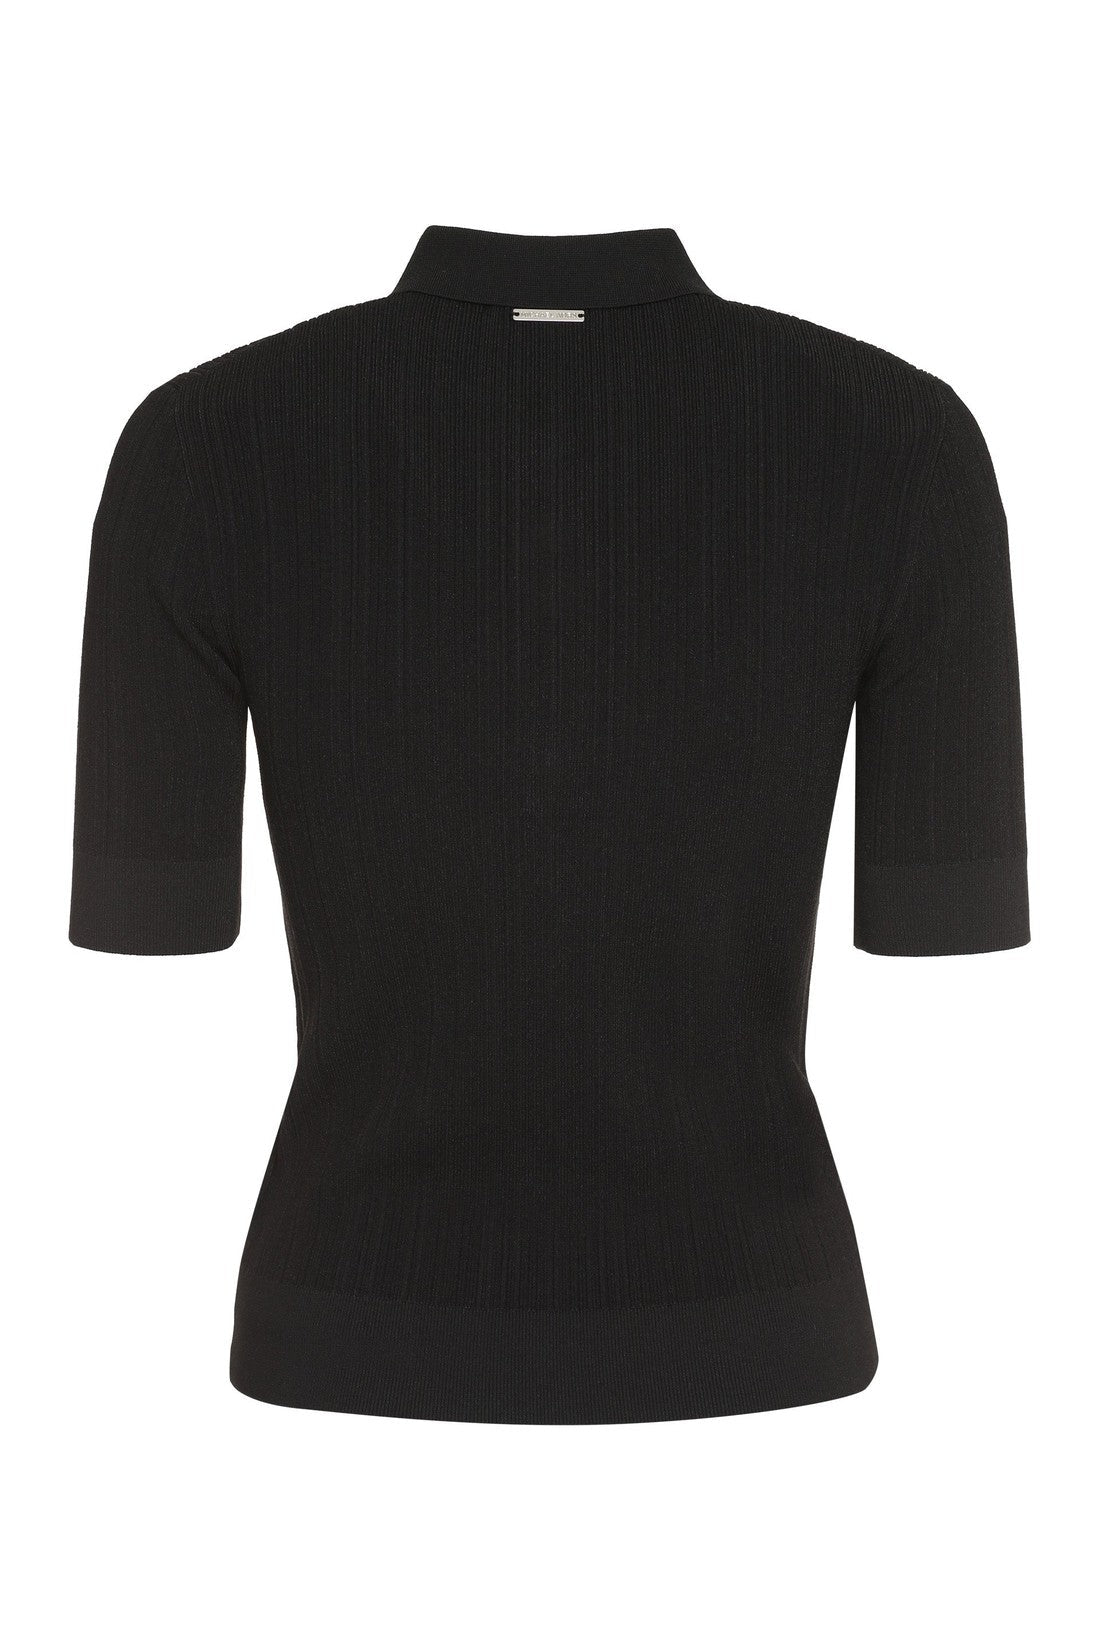 MICHAEL MICHAEL KORS-OUTLET-SALE-Ribbed knit polo shirt-ARCHIVIST